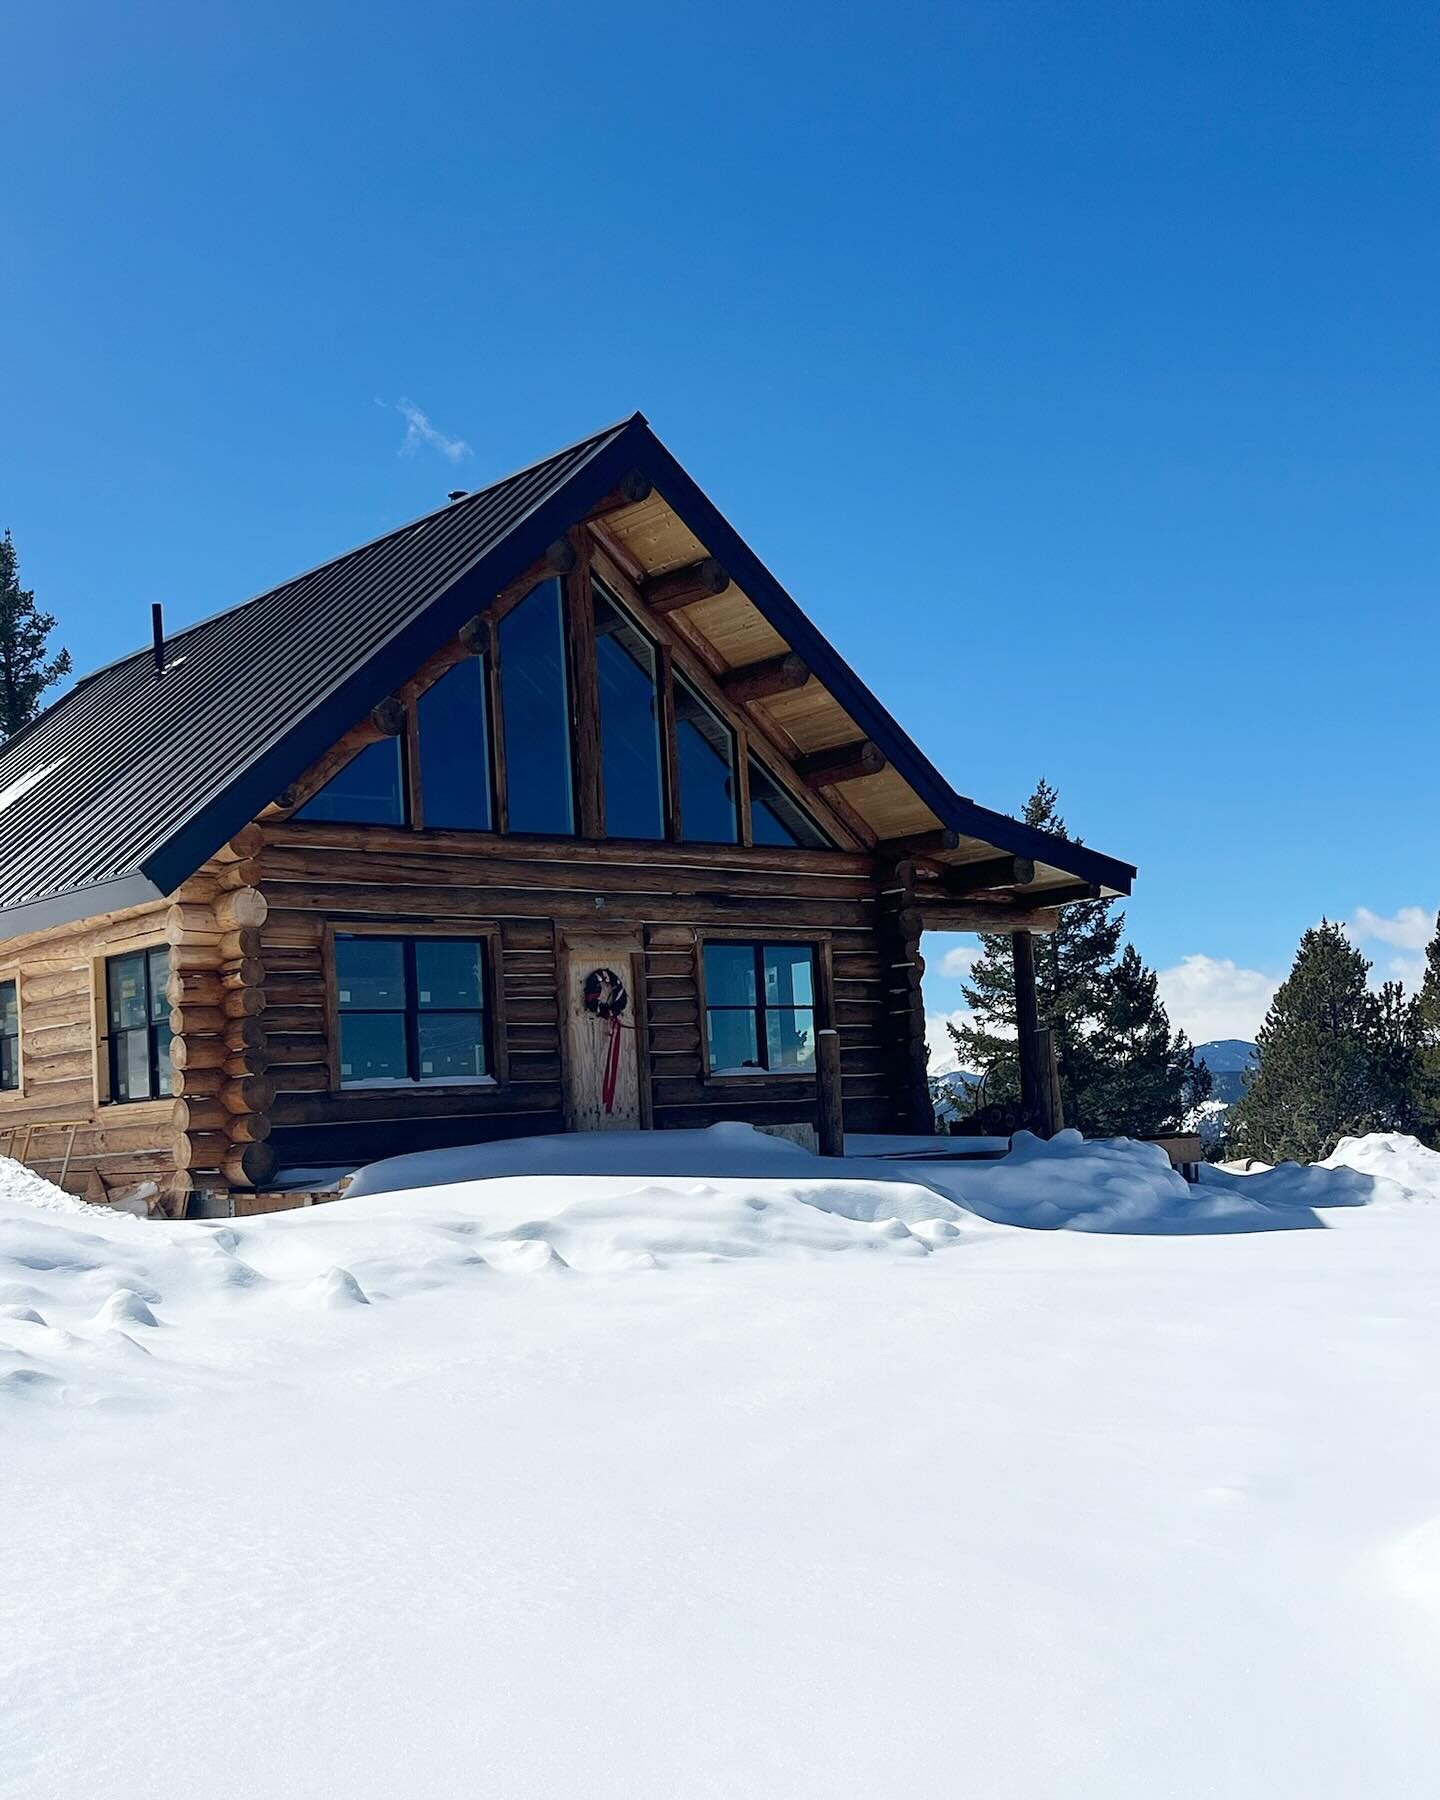 Starting interior finishes at the Black Hawk cabin this week! 

#build3 #construction #customhome #architecture #design #designbuild #mountainbuilder#denverhomebuilder #coloradoliving